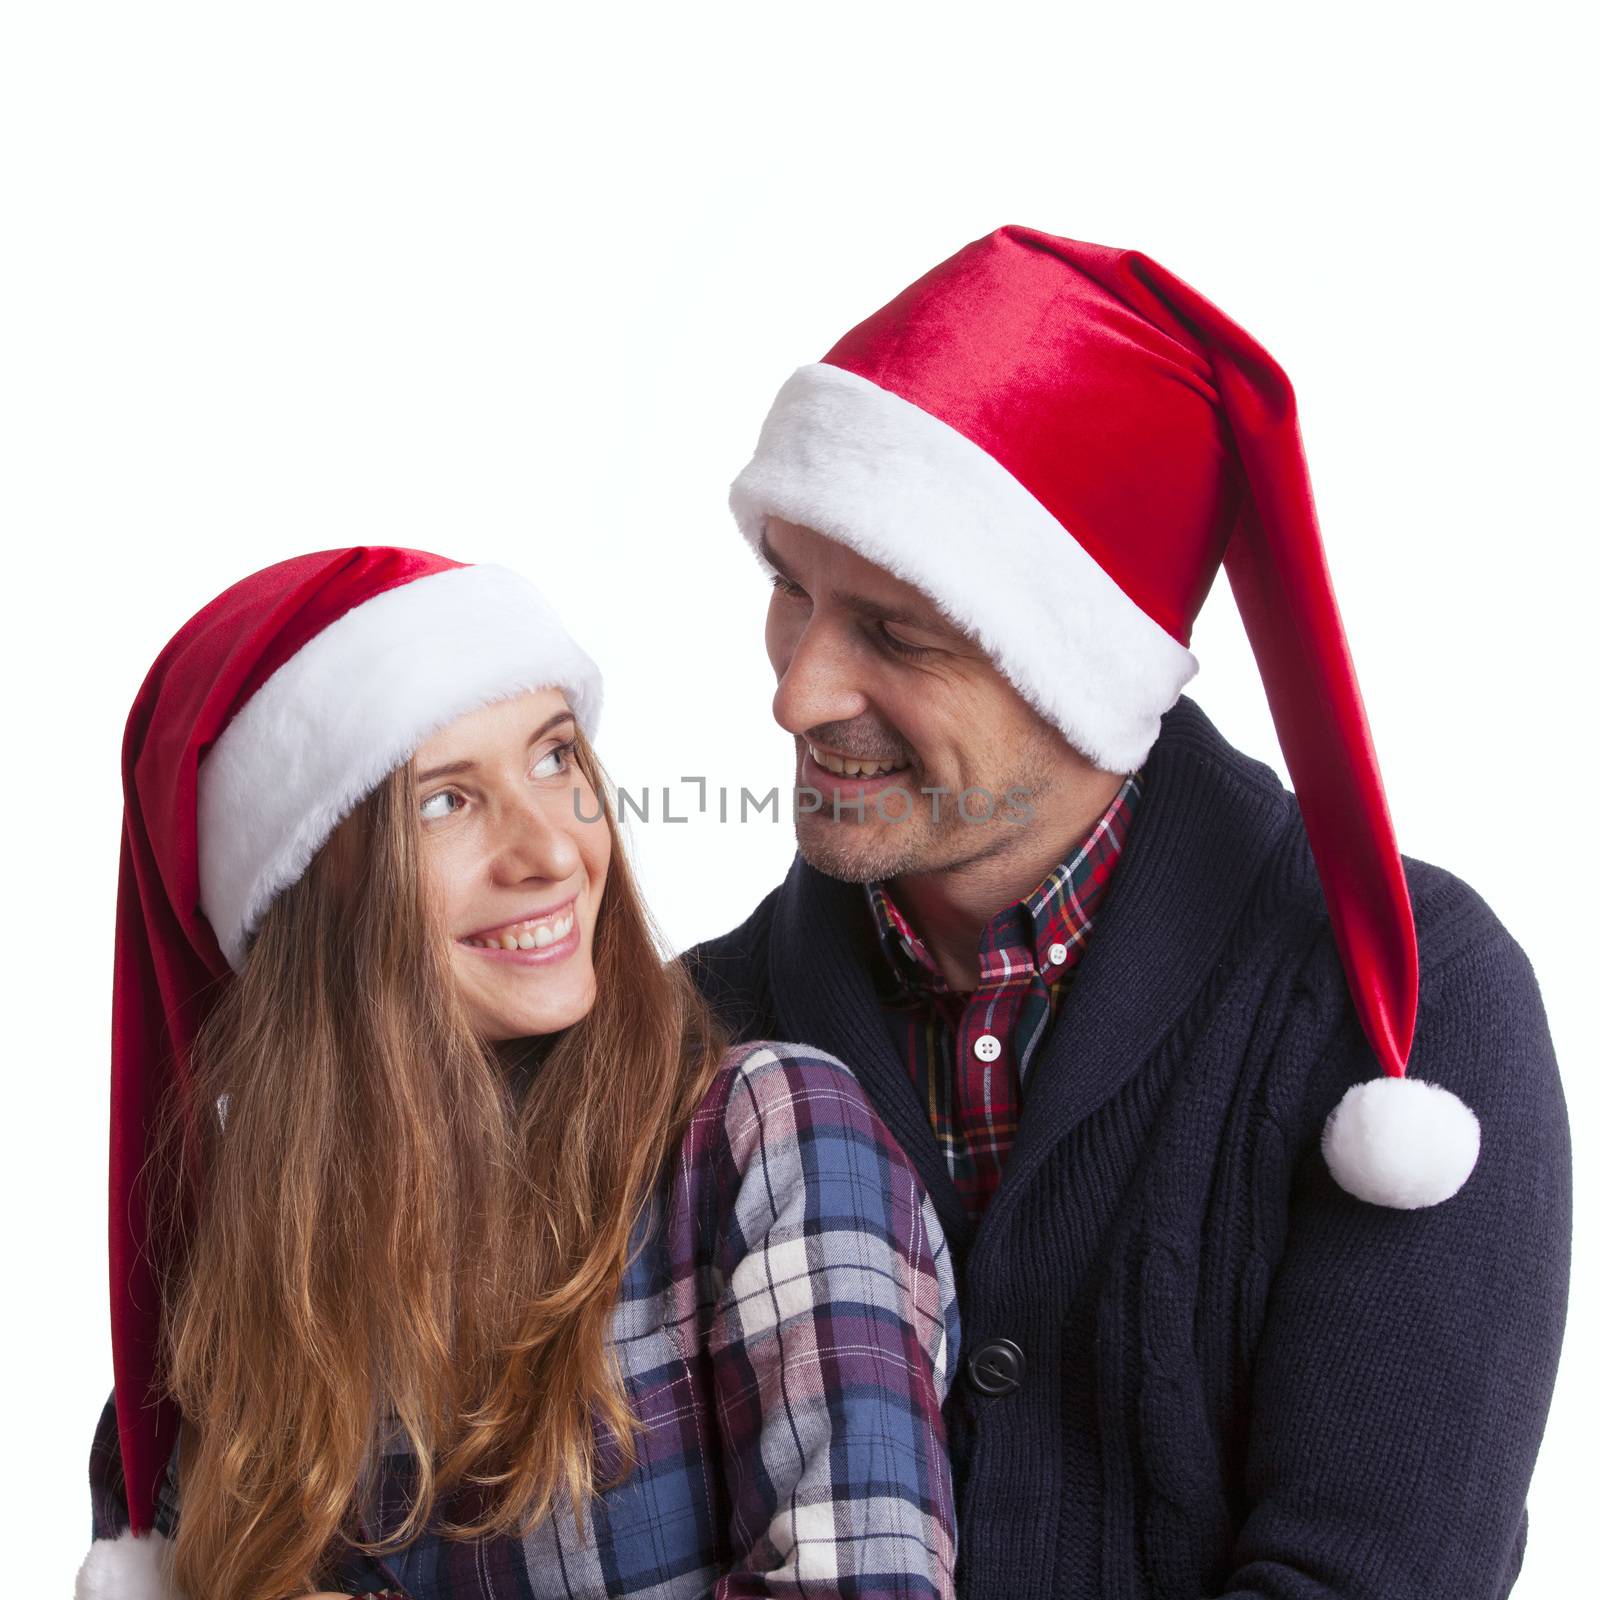 Couple in Santa hats by ALotOfPeople